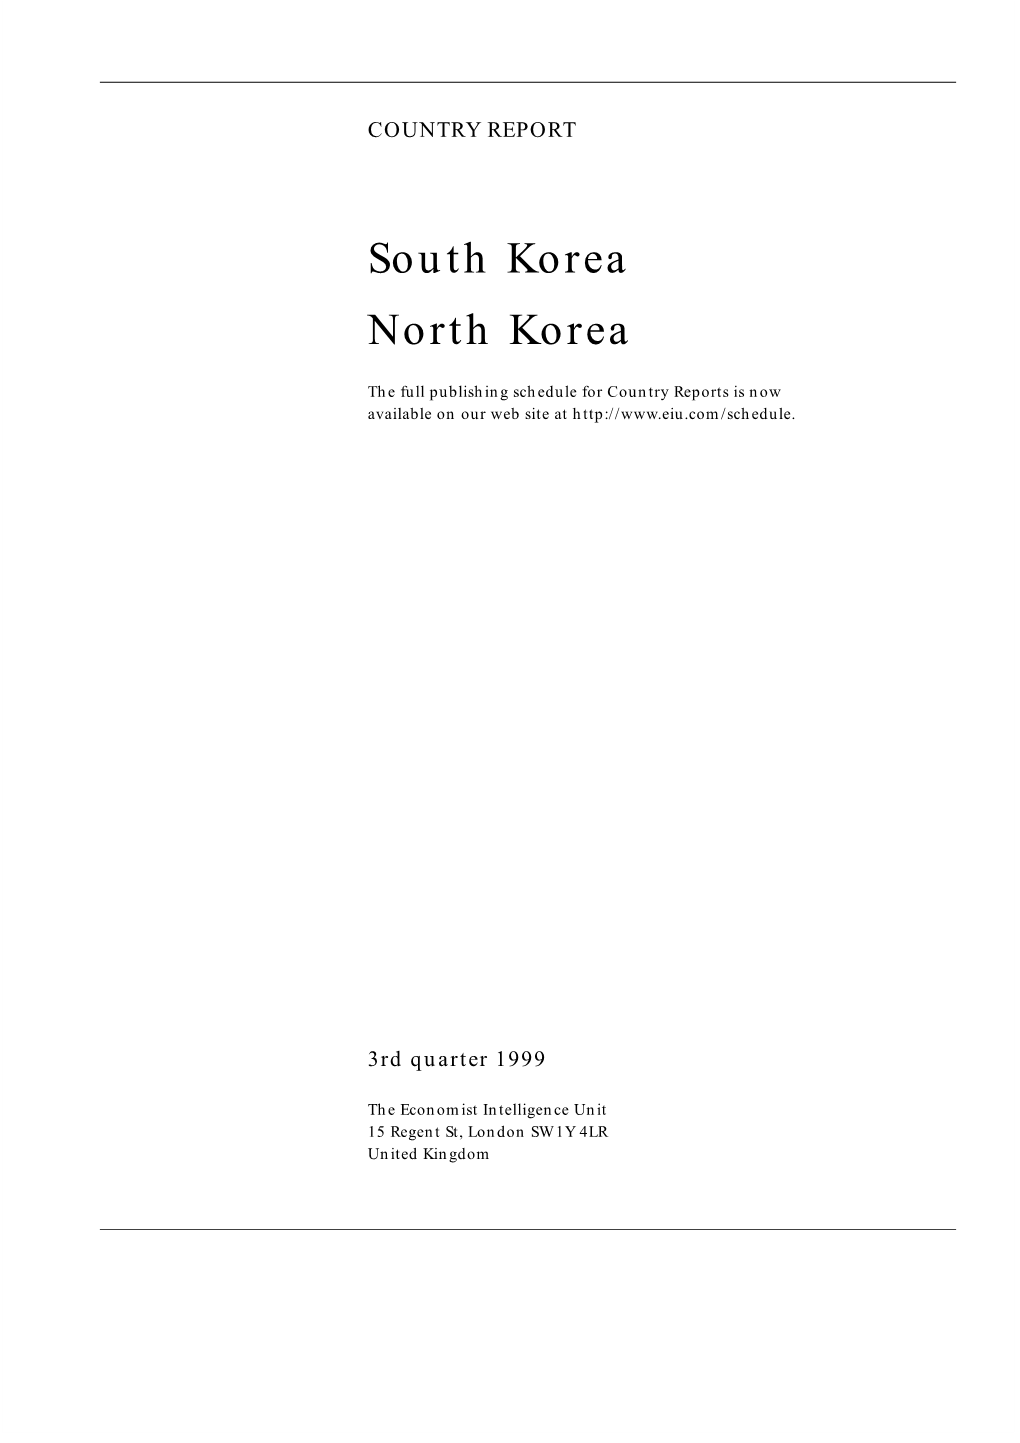 South Korea North Korea